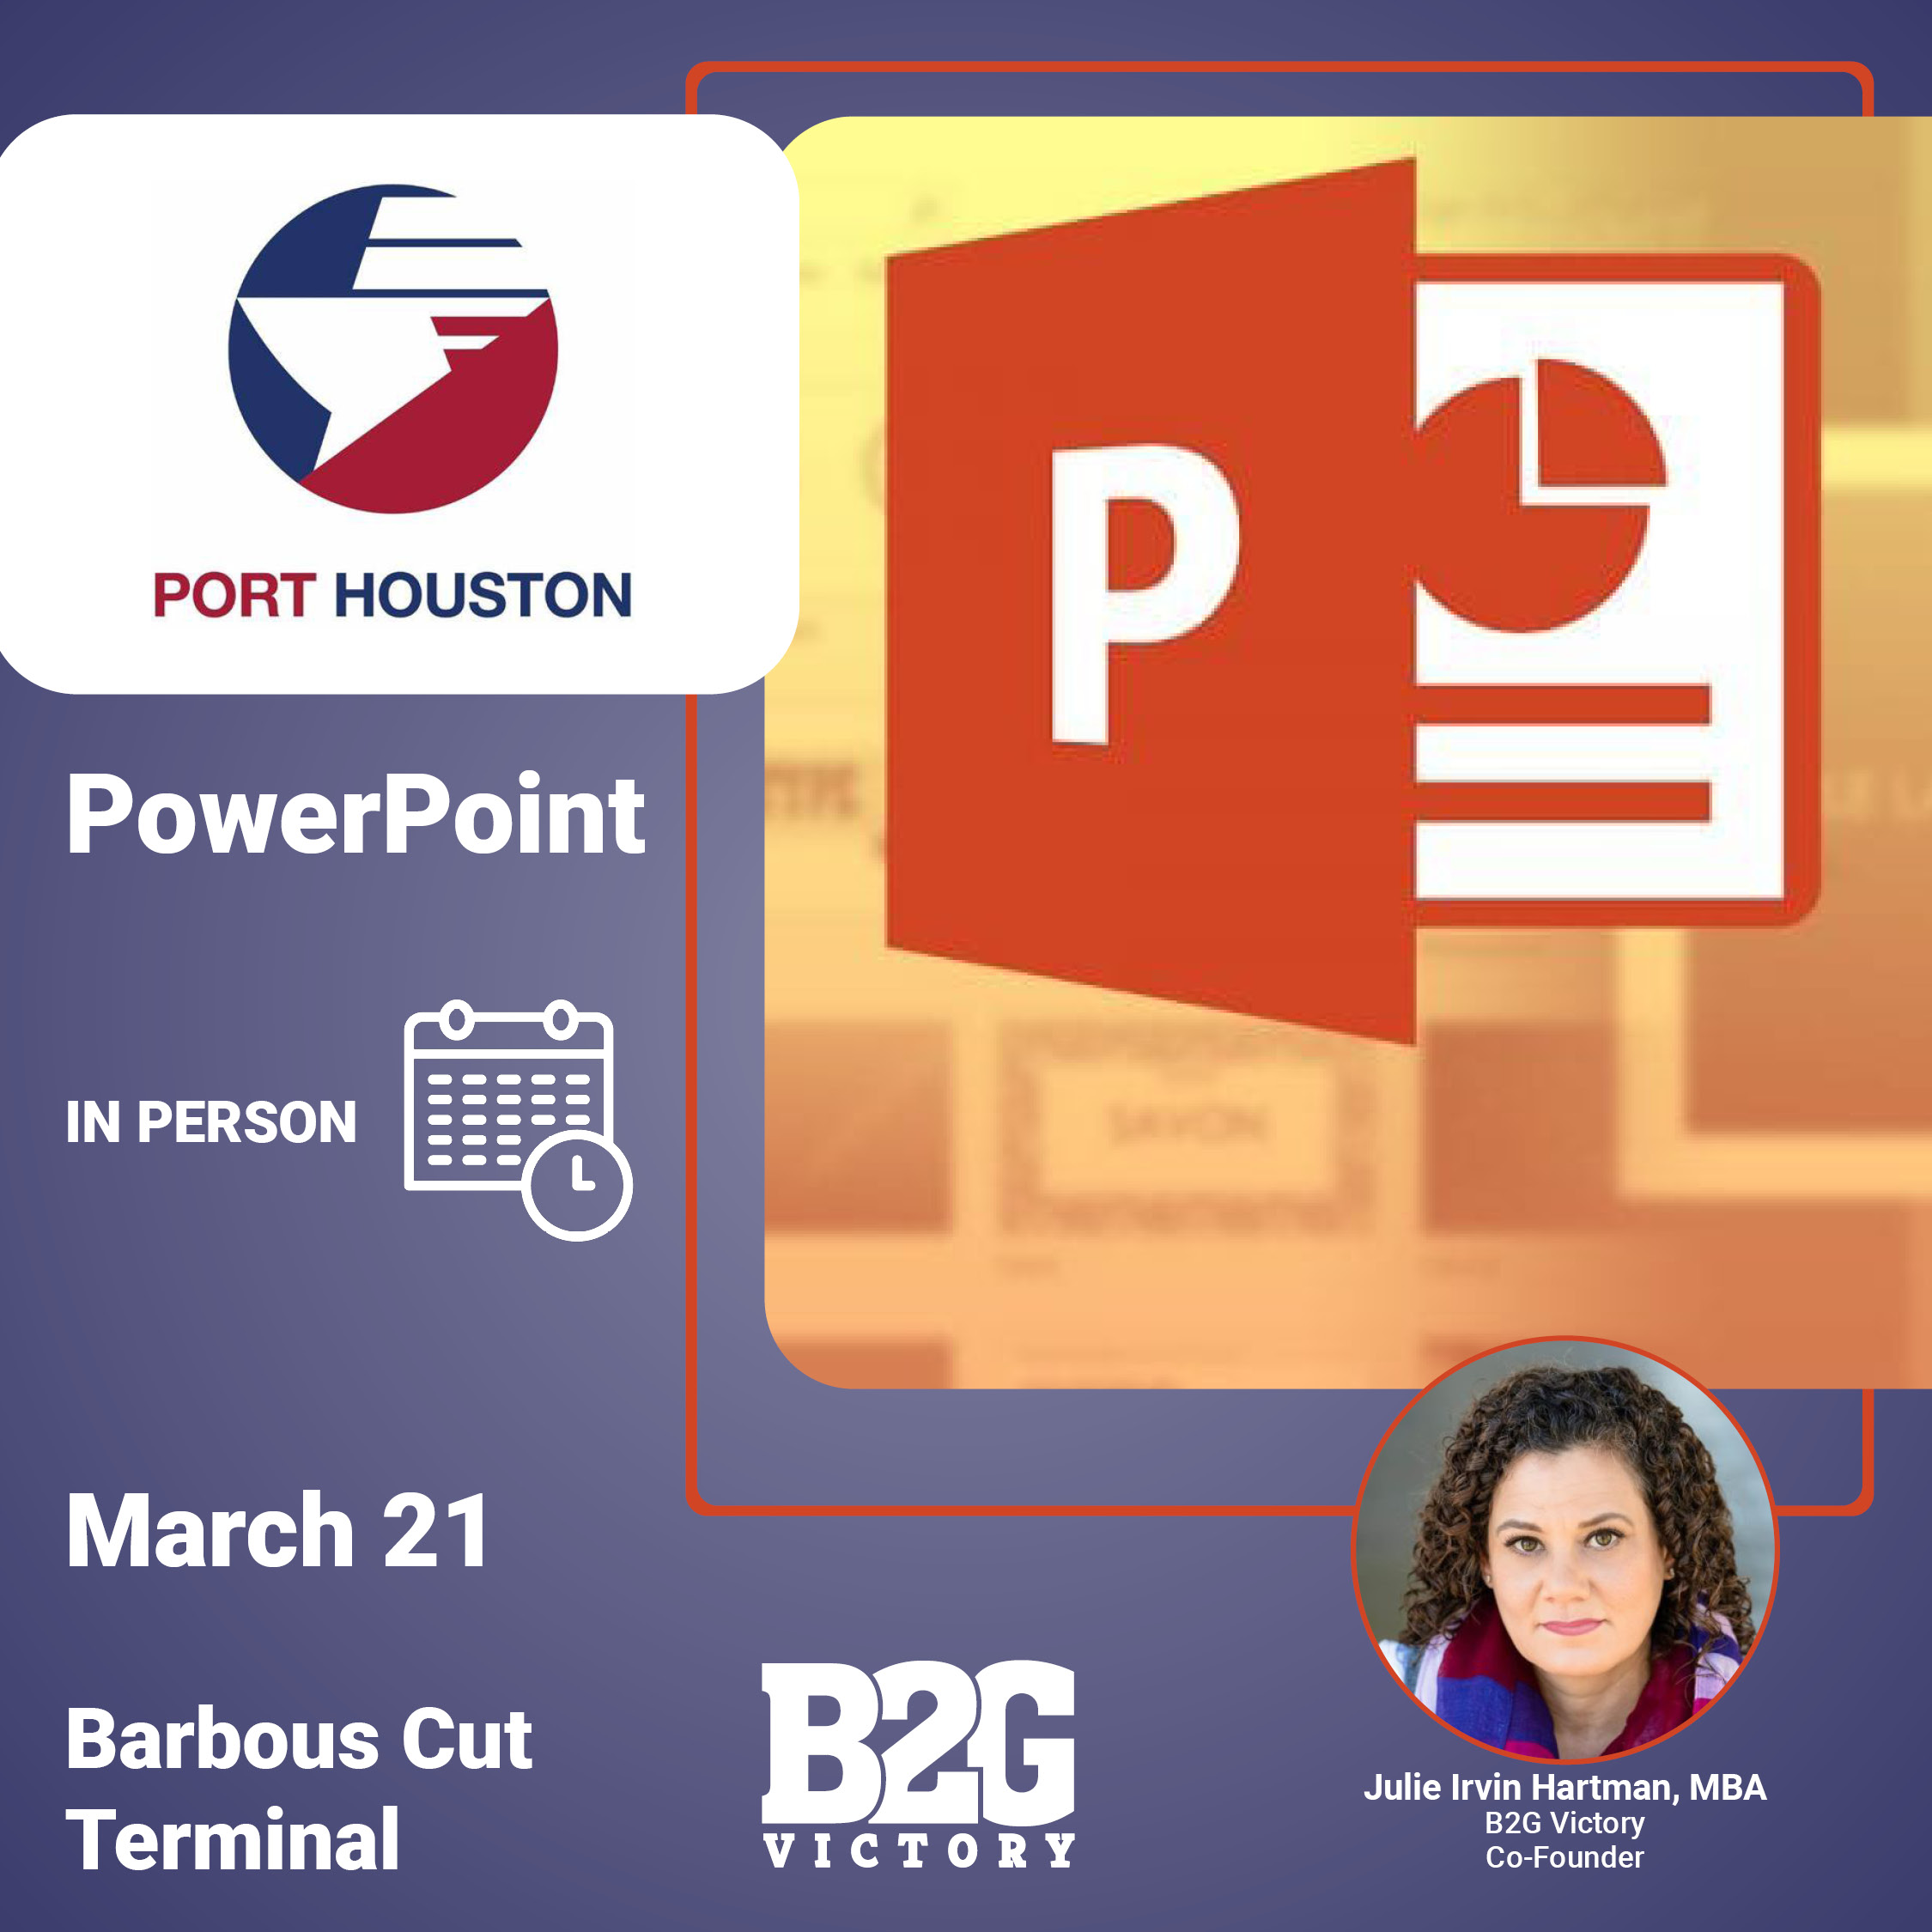 Port Houston PowerPoint Training March 21 Barbous Cut Terminal